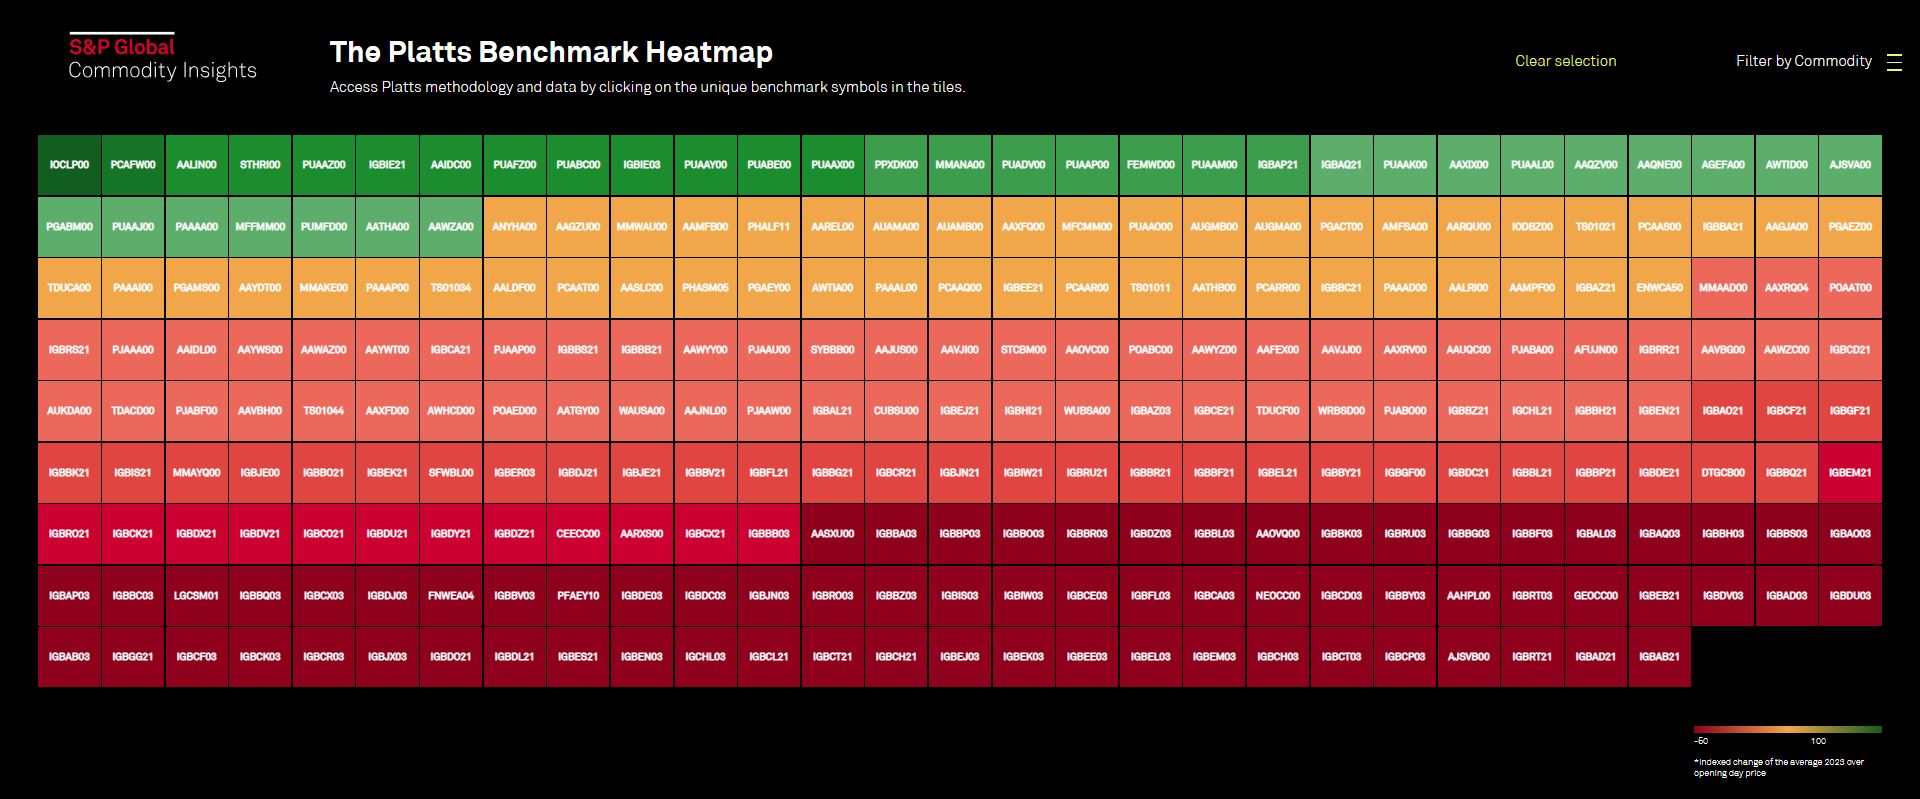 The Platts Benchmark Heatmap